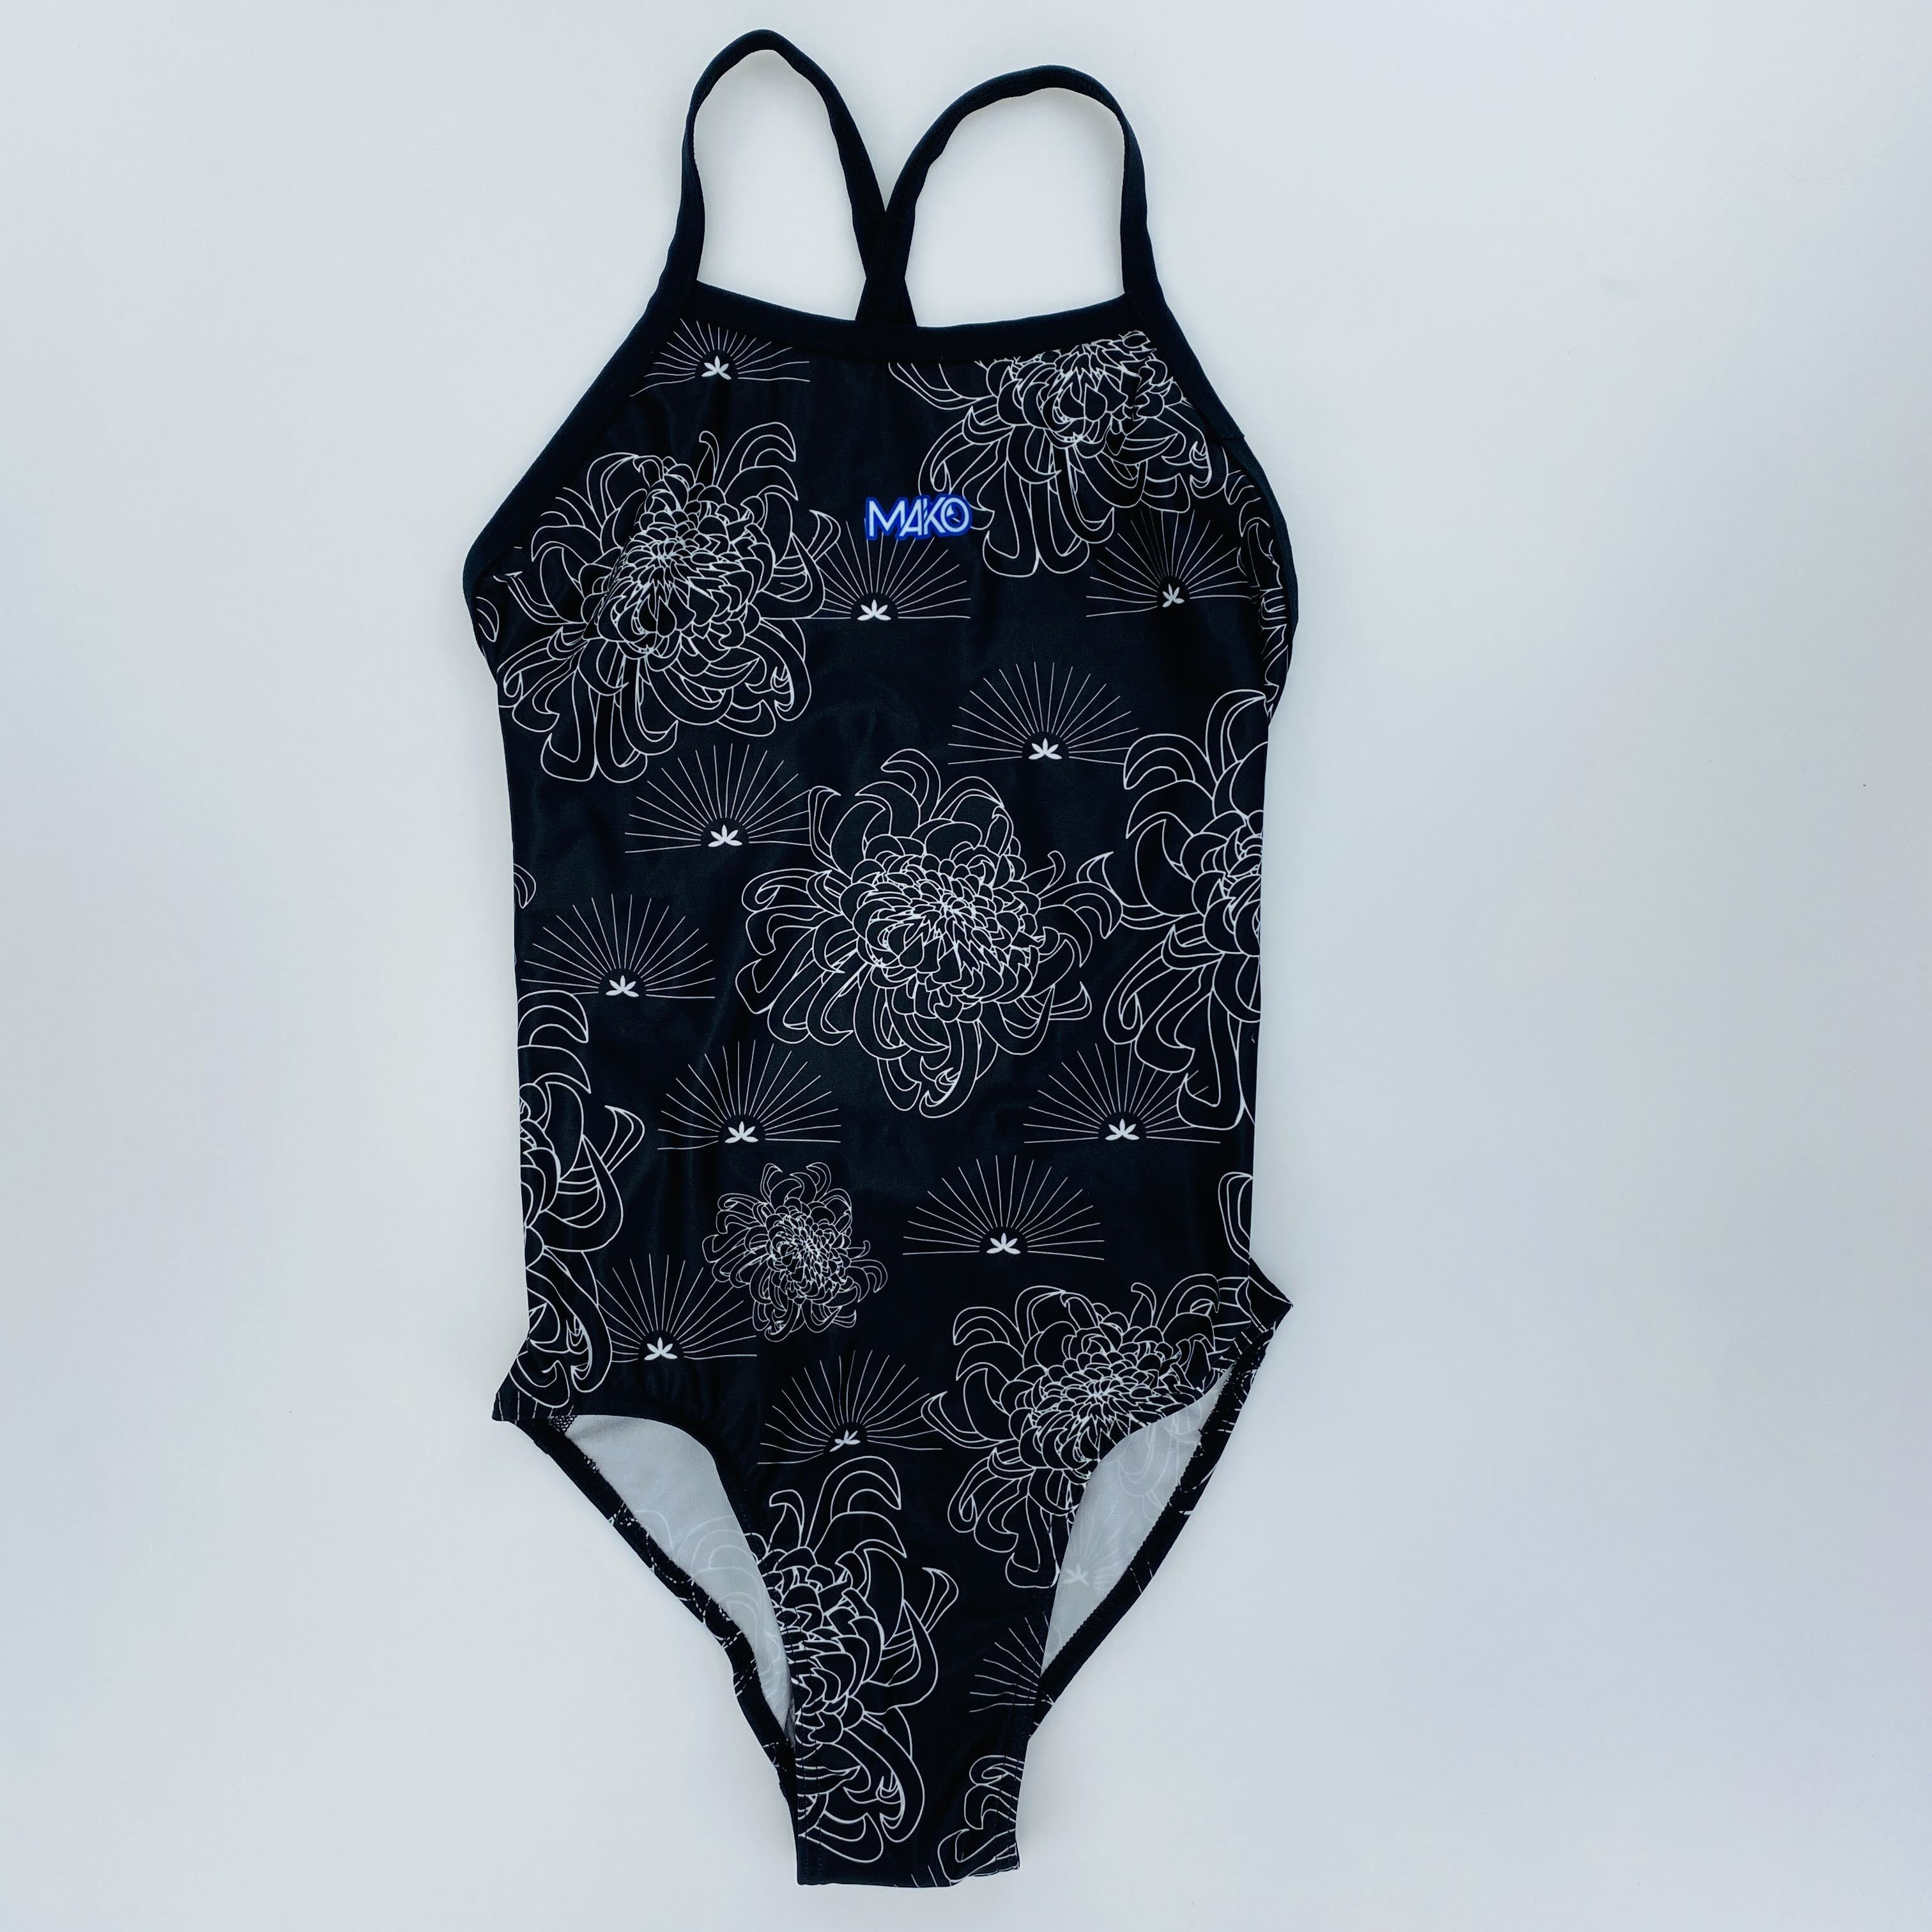 Mako Nereid - Second Hand Swimsuit - Black - 36 | Hardloop